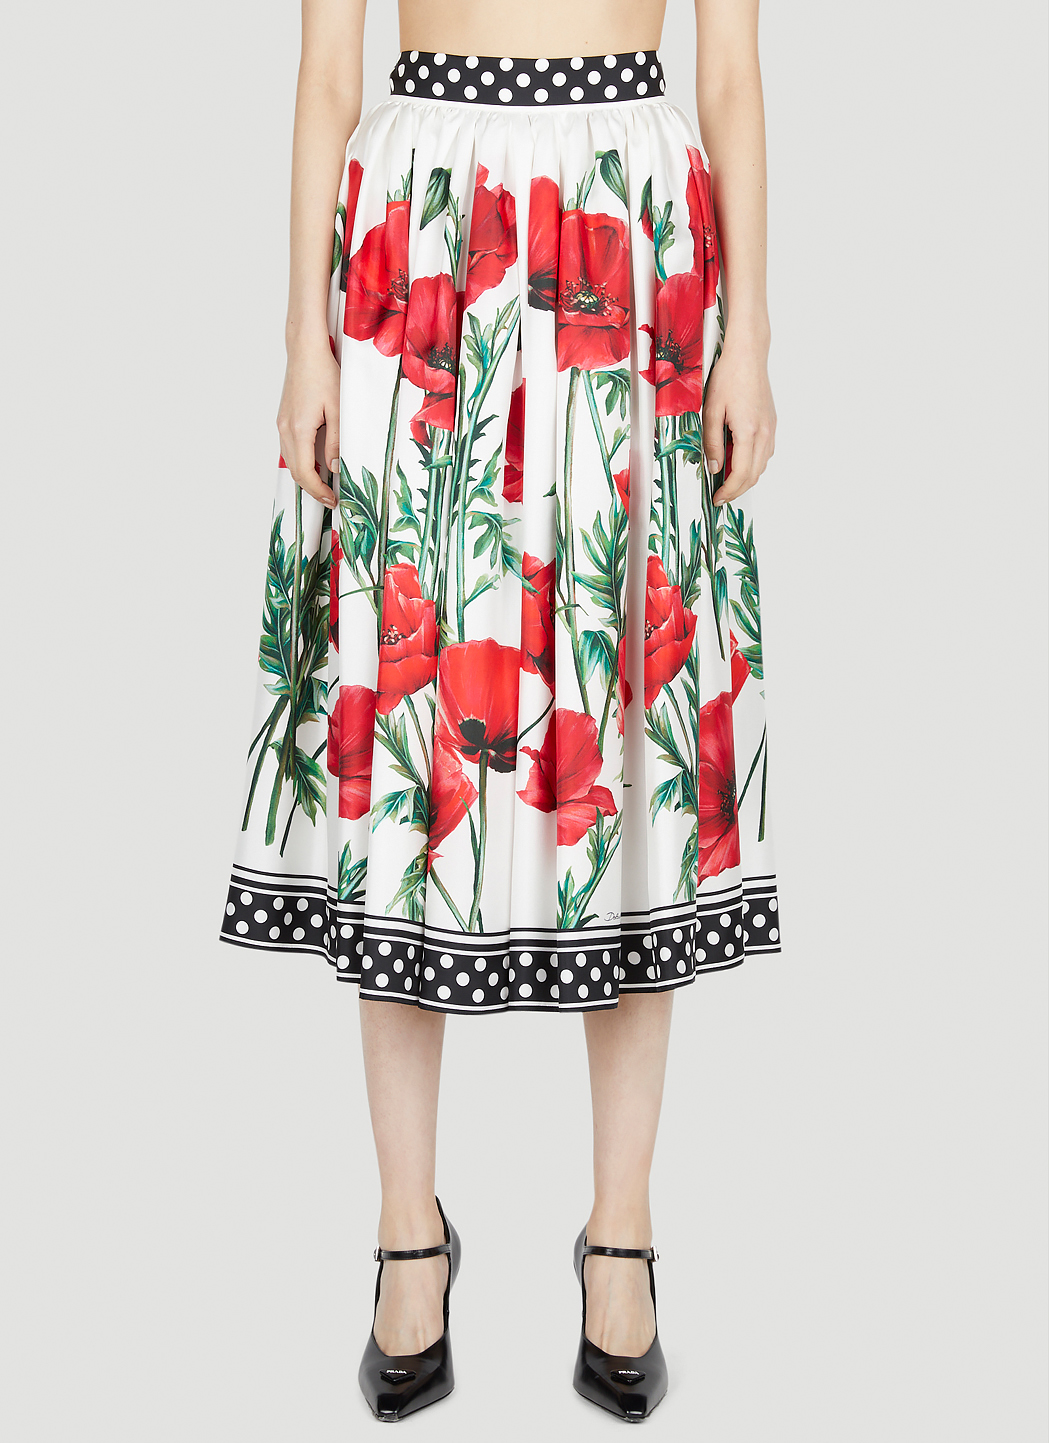 Dolce&Gabbana Poppy Print Pleated Skirt